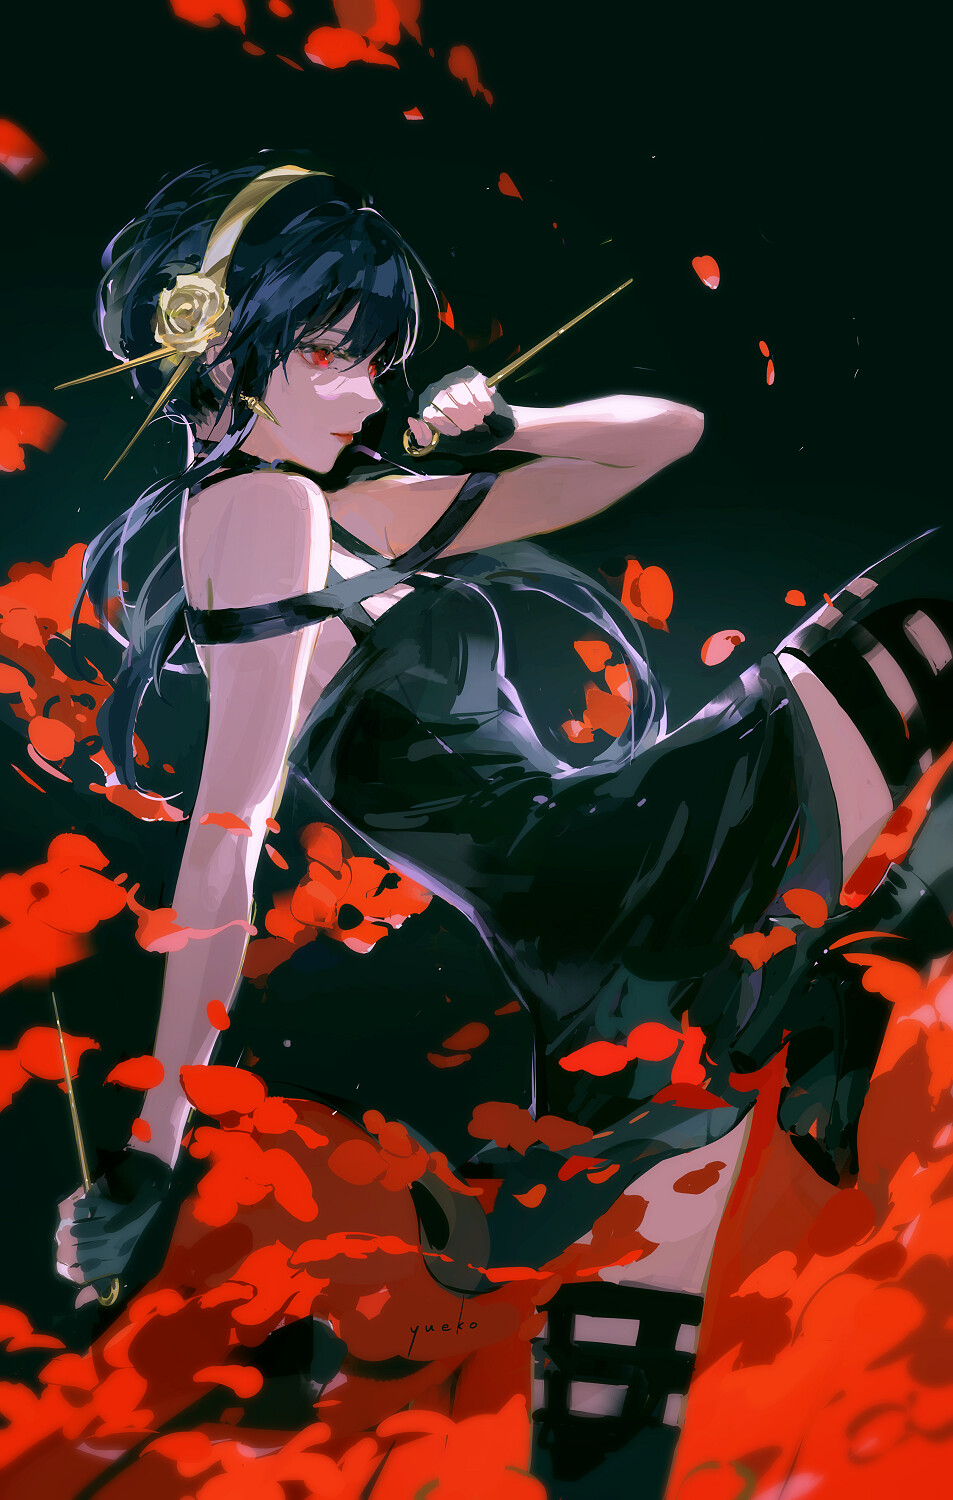 Anime Anime Girls Girl With Weapon Black Hair Black Clothing Heels Dress Spy X Family Yor Forger Pet 953x1500